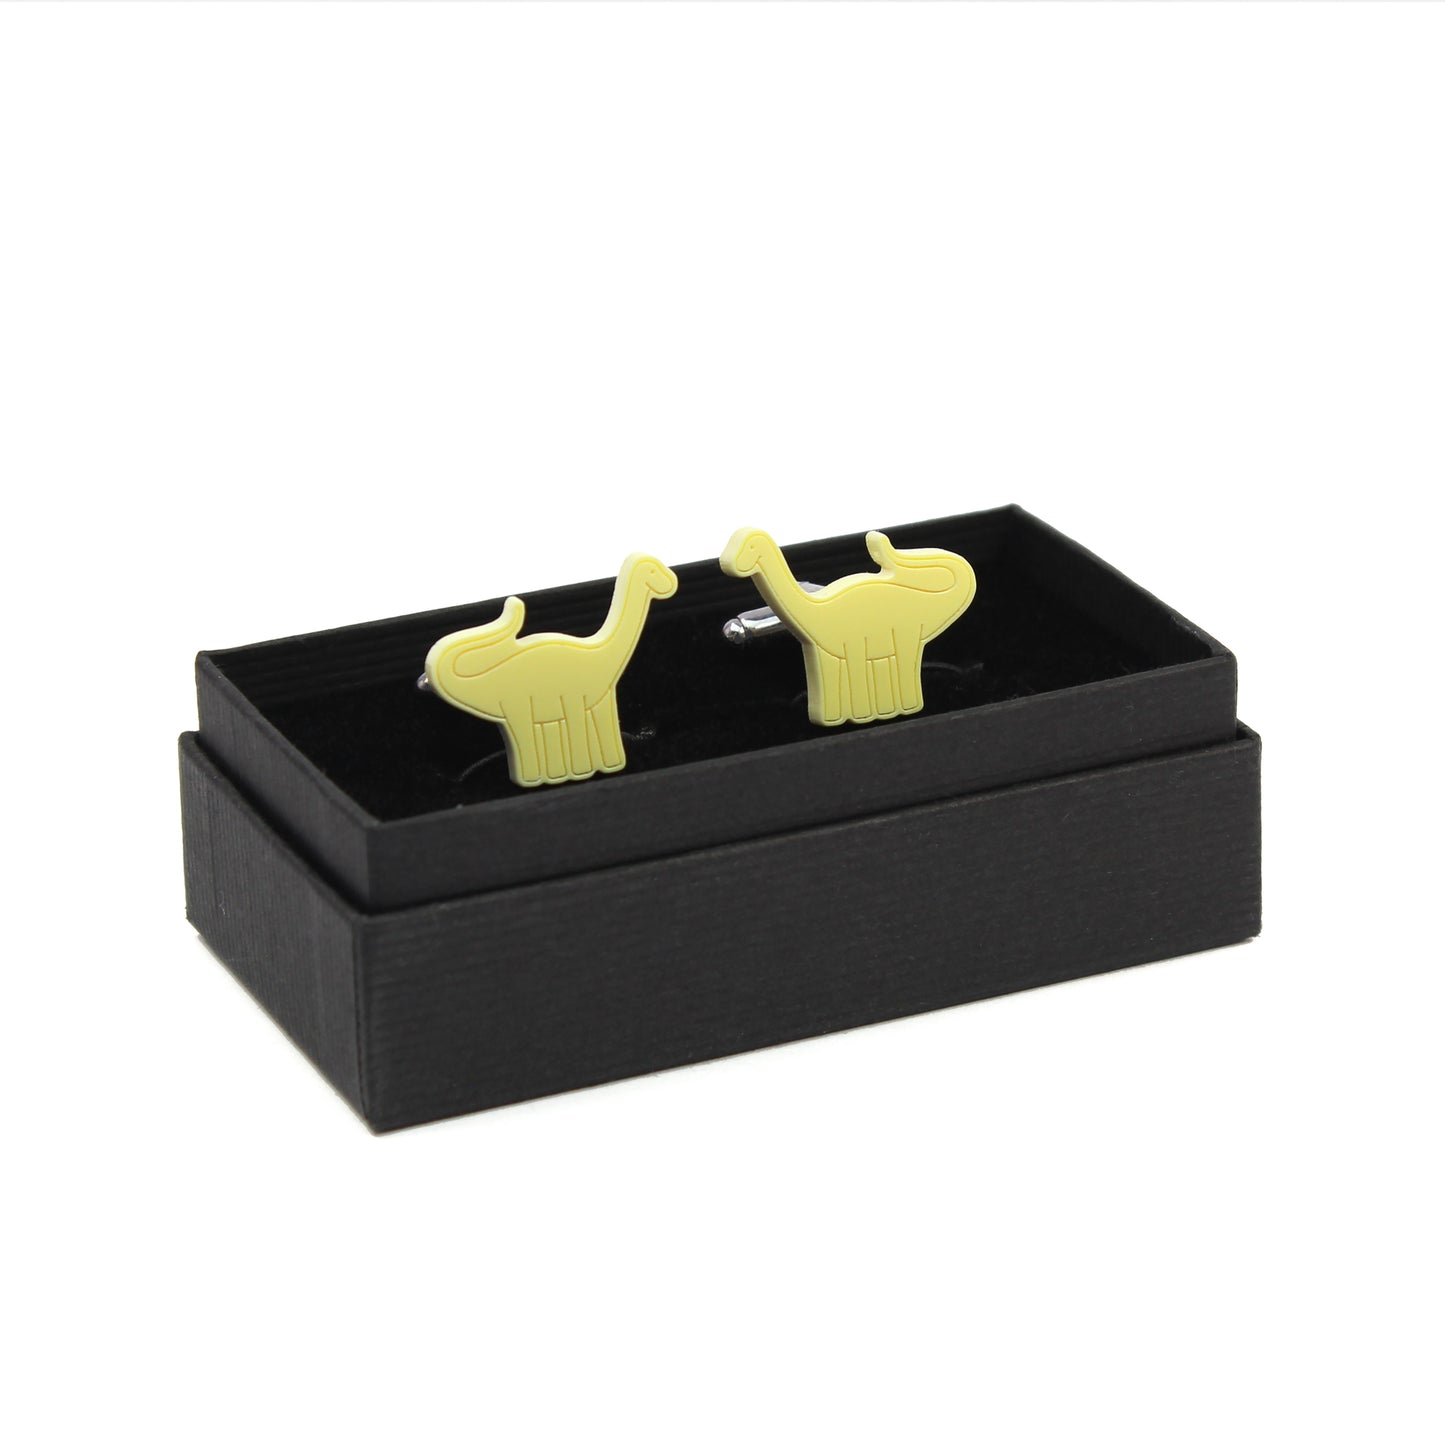 a pair of yellow brontosaurus cufflinks in a black box